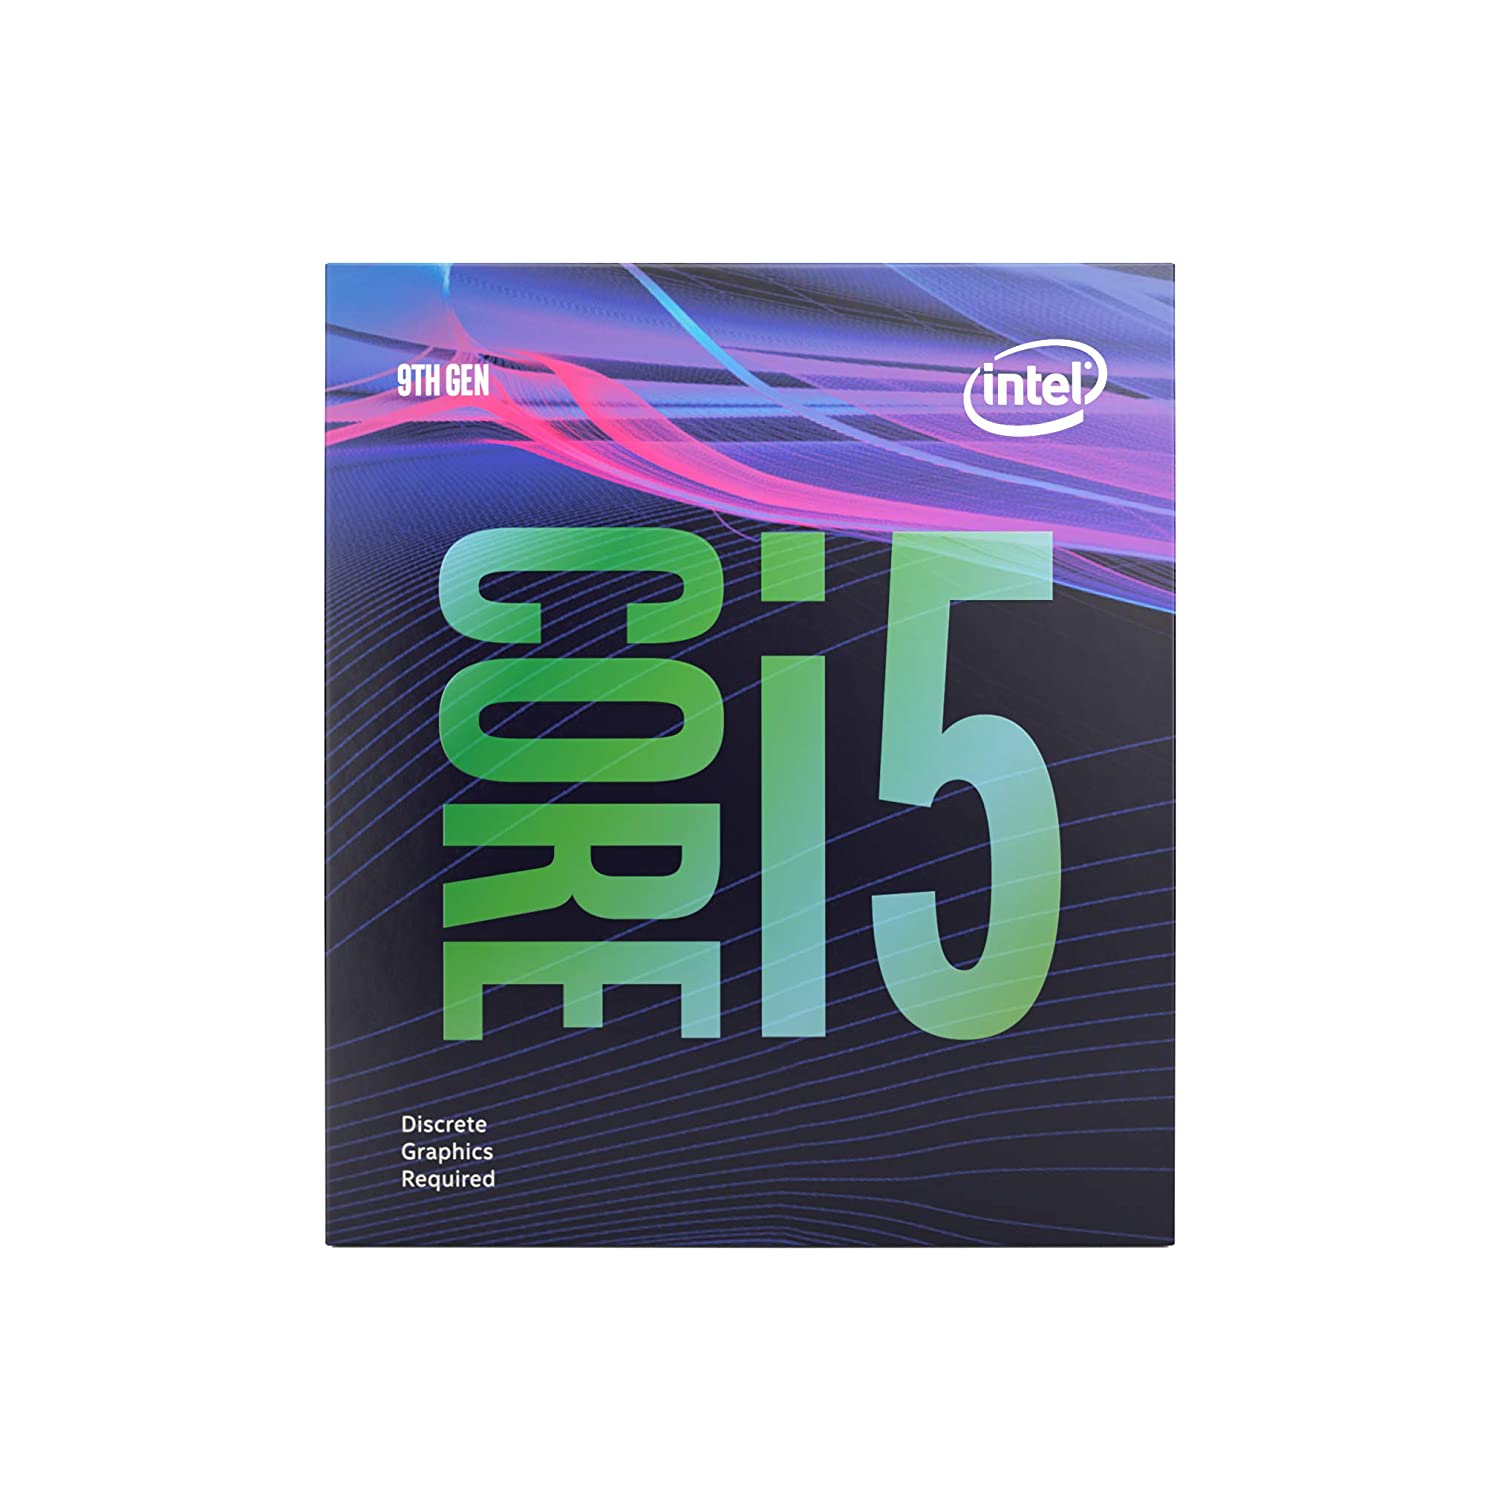 Intel Corporation Core i5 9400F 9th Generation Desktop Processor 6 Cores up to 4.1 GHz Turbo